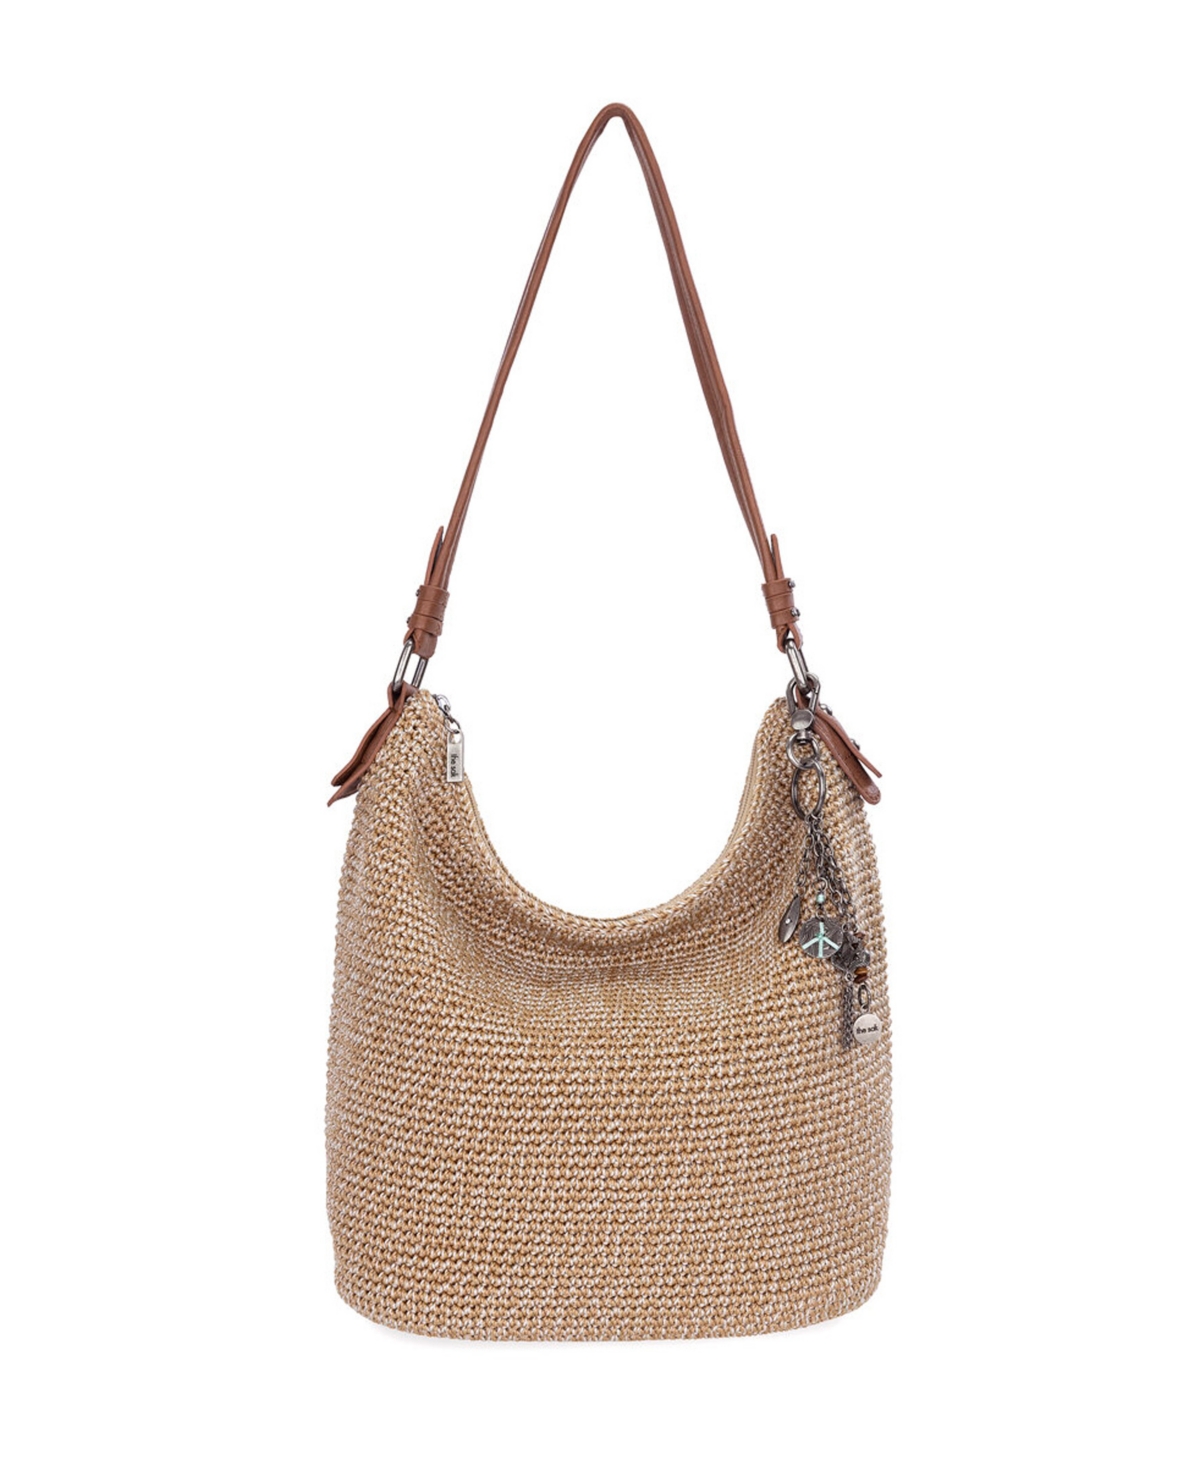 Sequoia Crochet Hobo Medium Handbag - Ecru Multi Beads